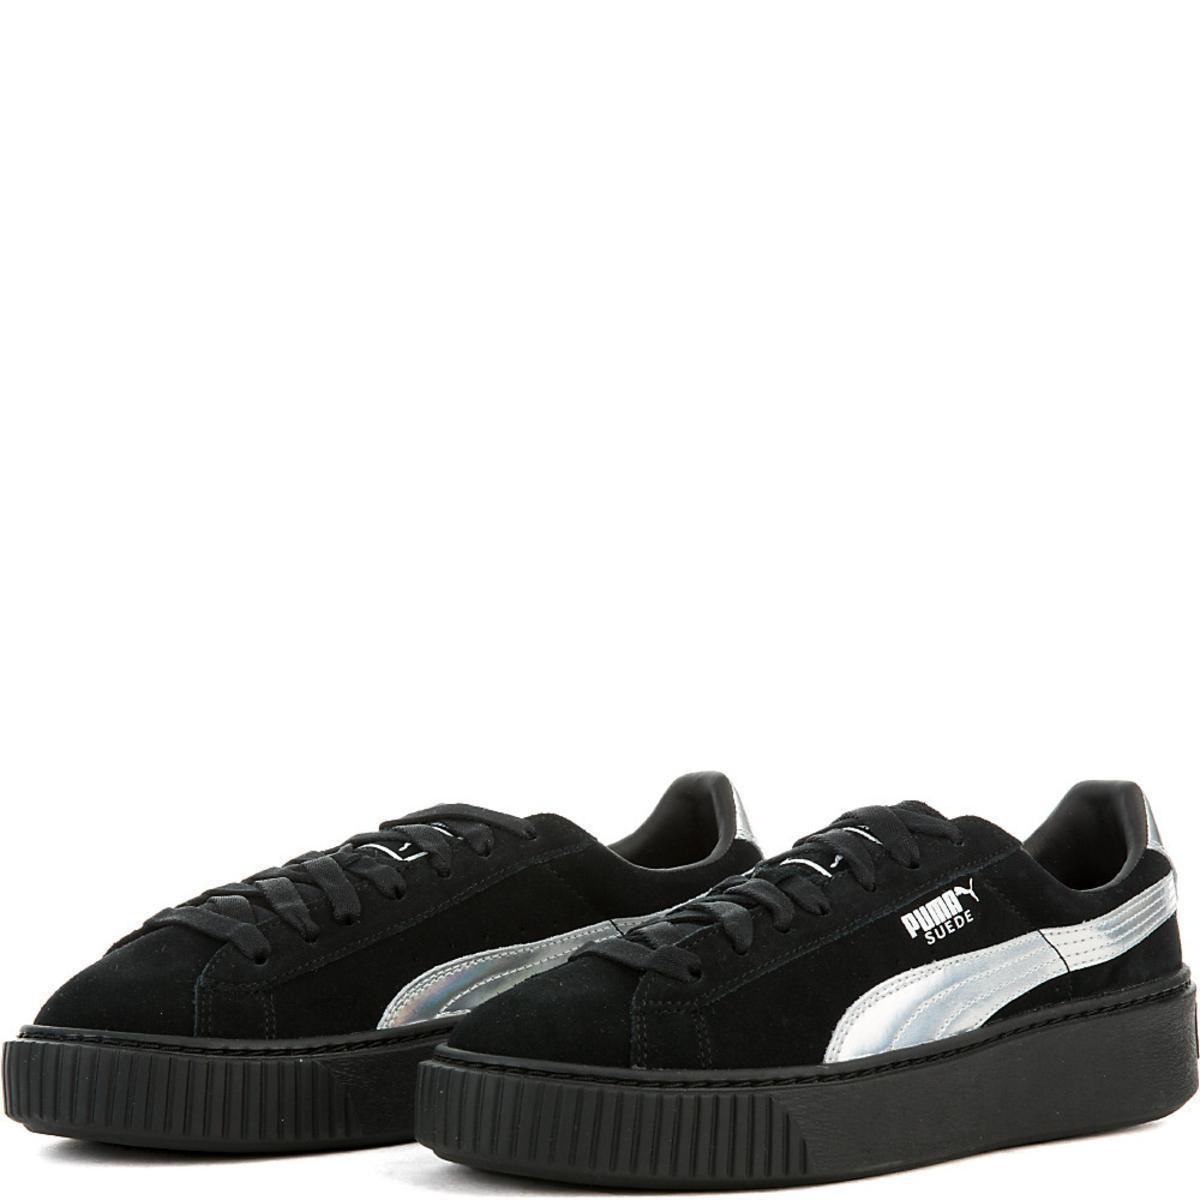 puma black suede platform sneakers